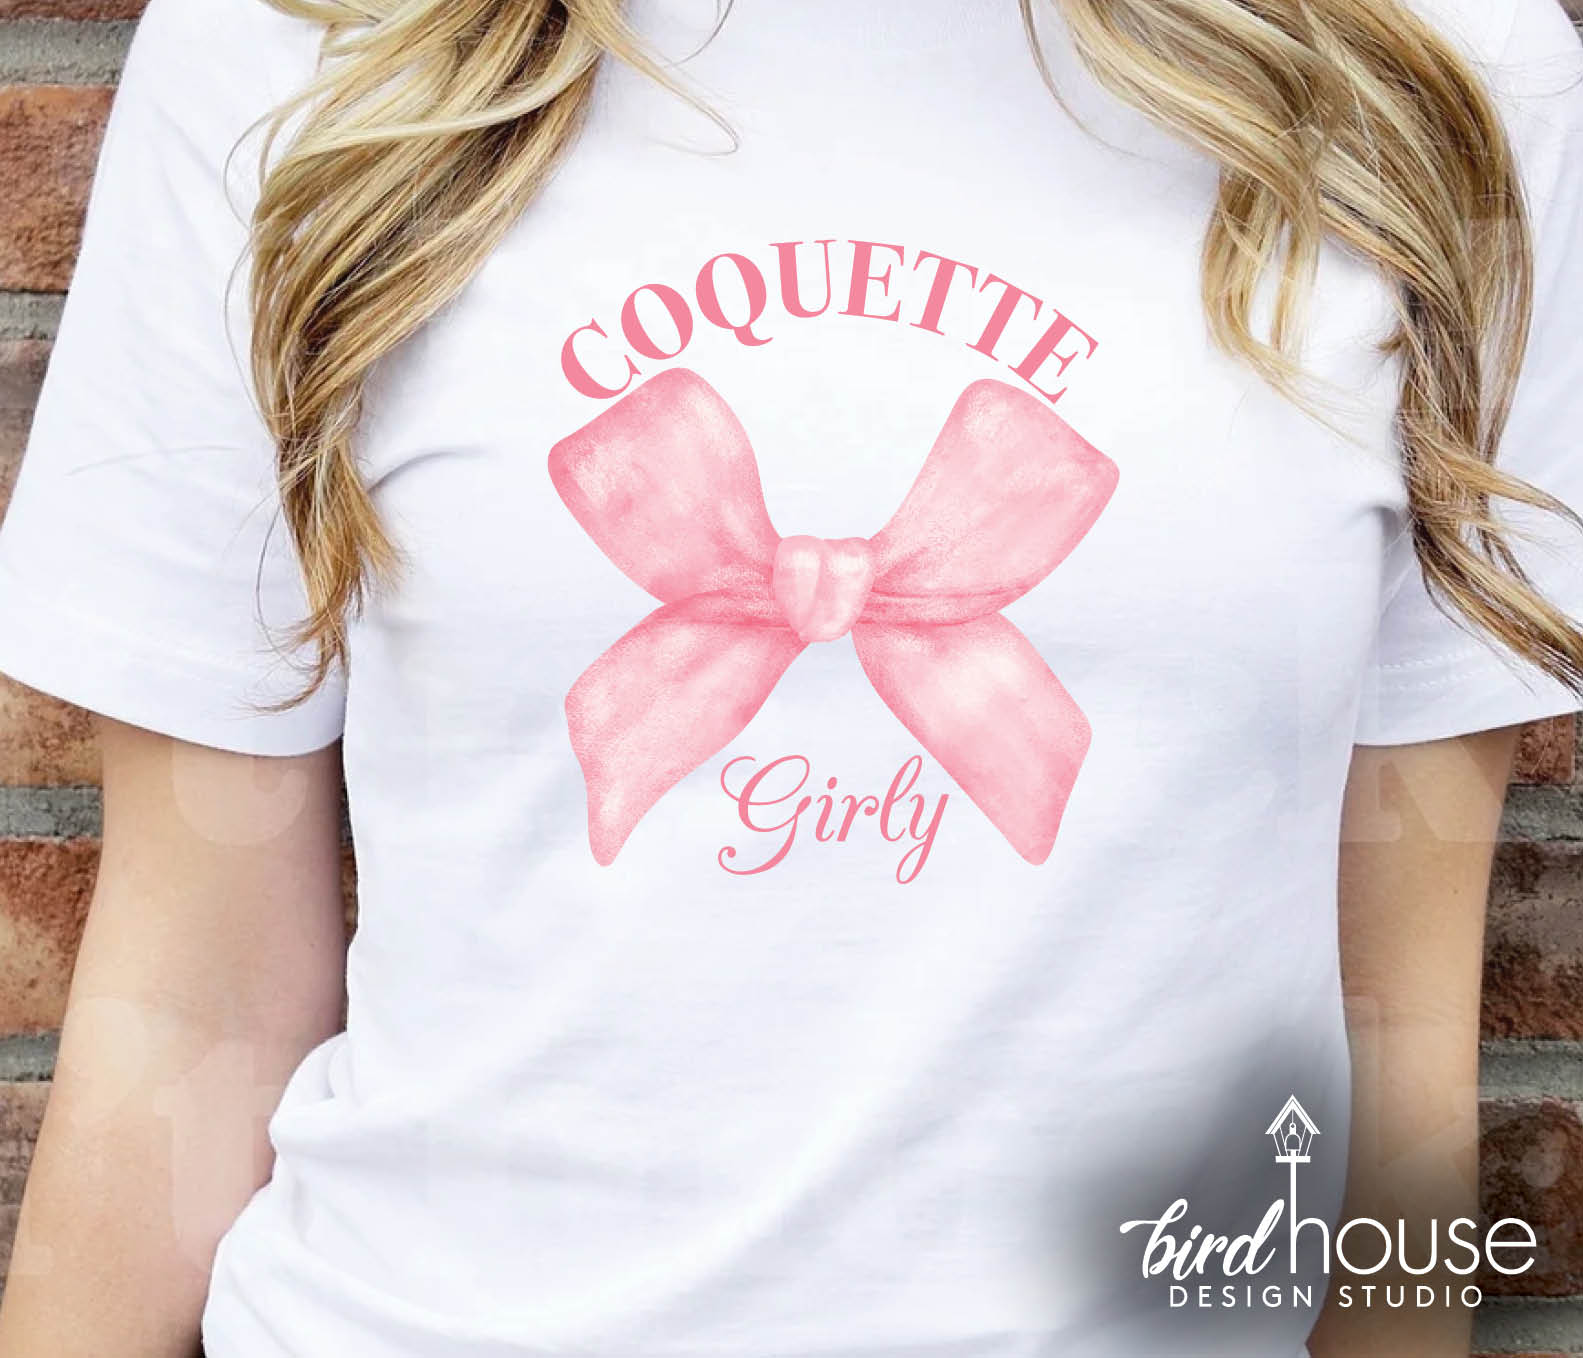 Coquette Clothing, Coquette Graphic Tee, Coquette Shirt, Coquette